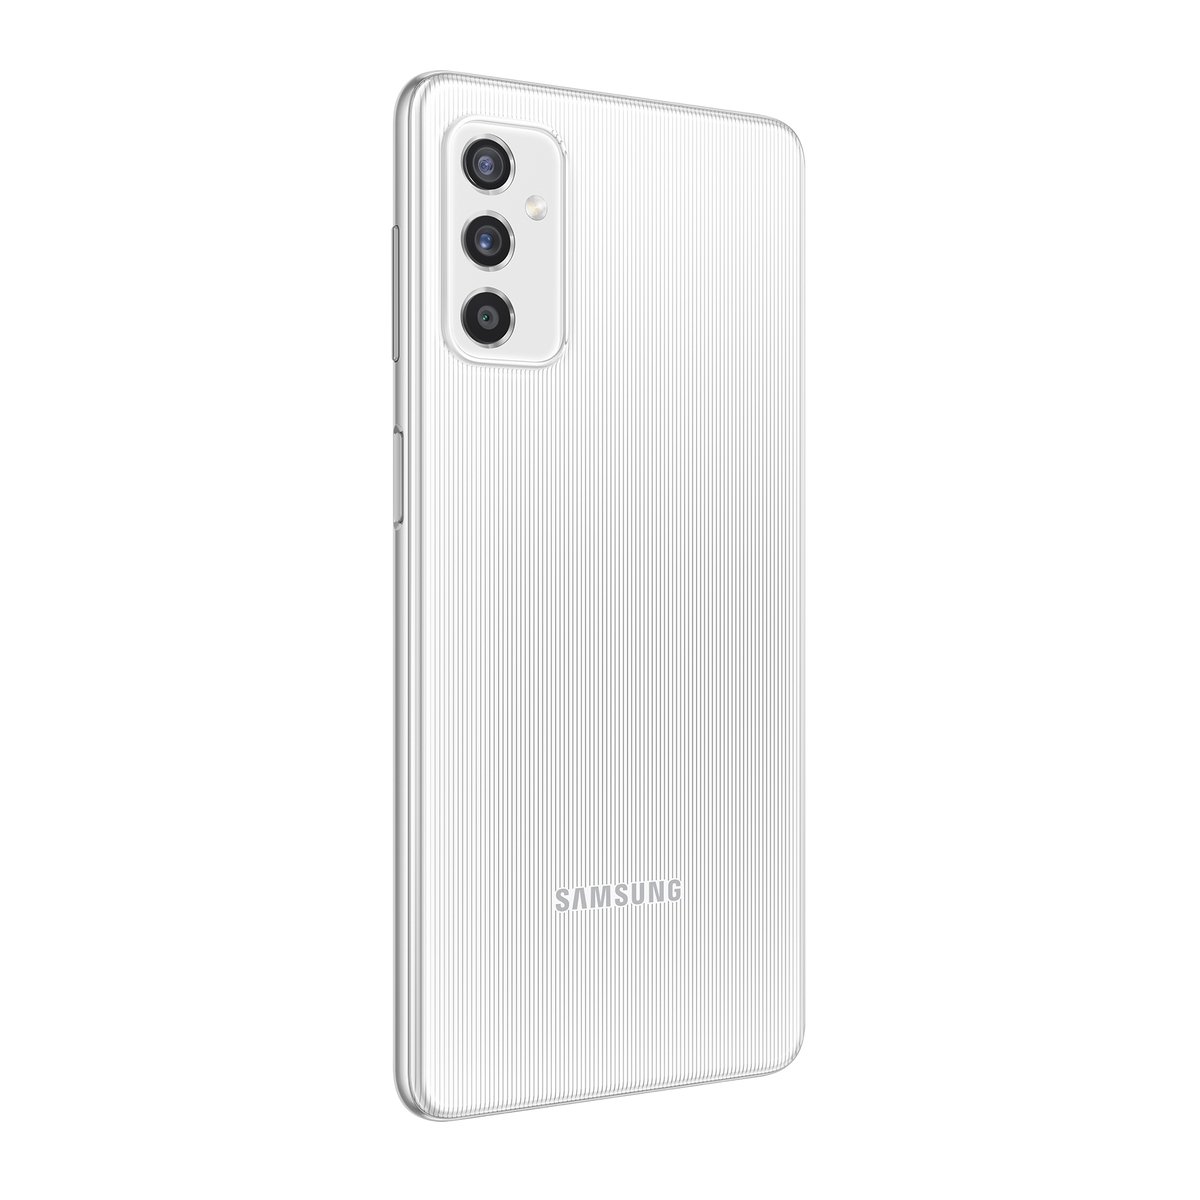 Samsung Galaxy M52,5G Dual SIM Smartphone, 128GB Storage and 8GB RAM, White 